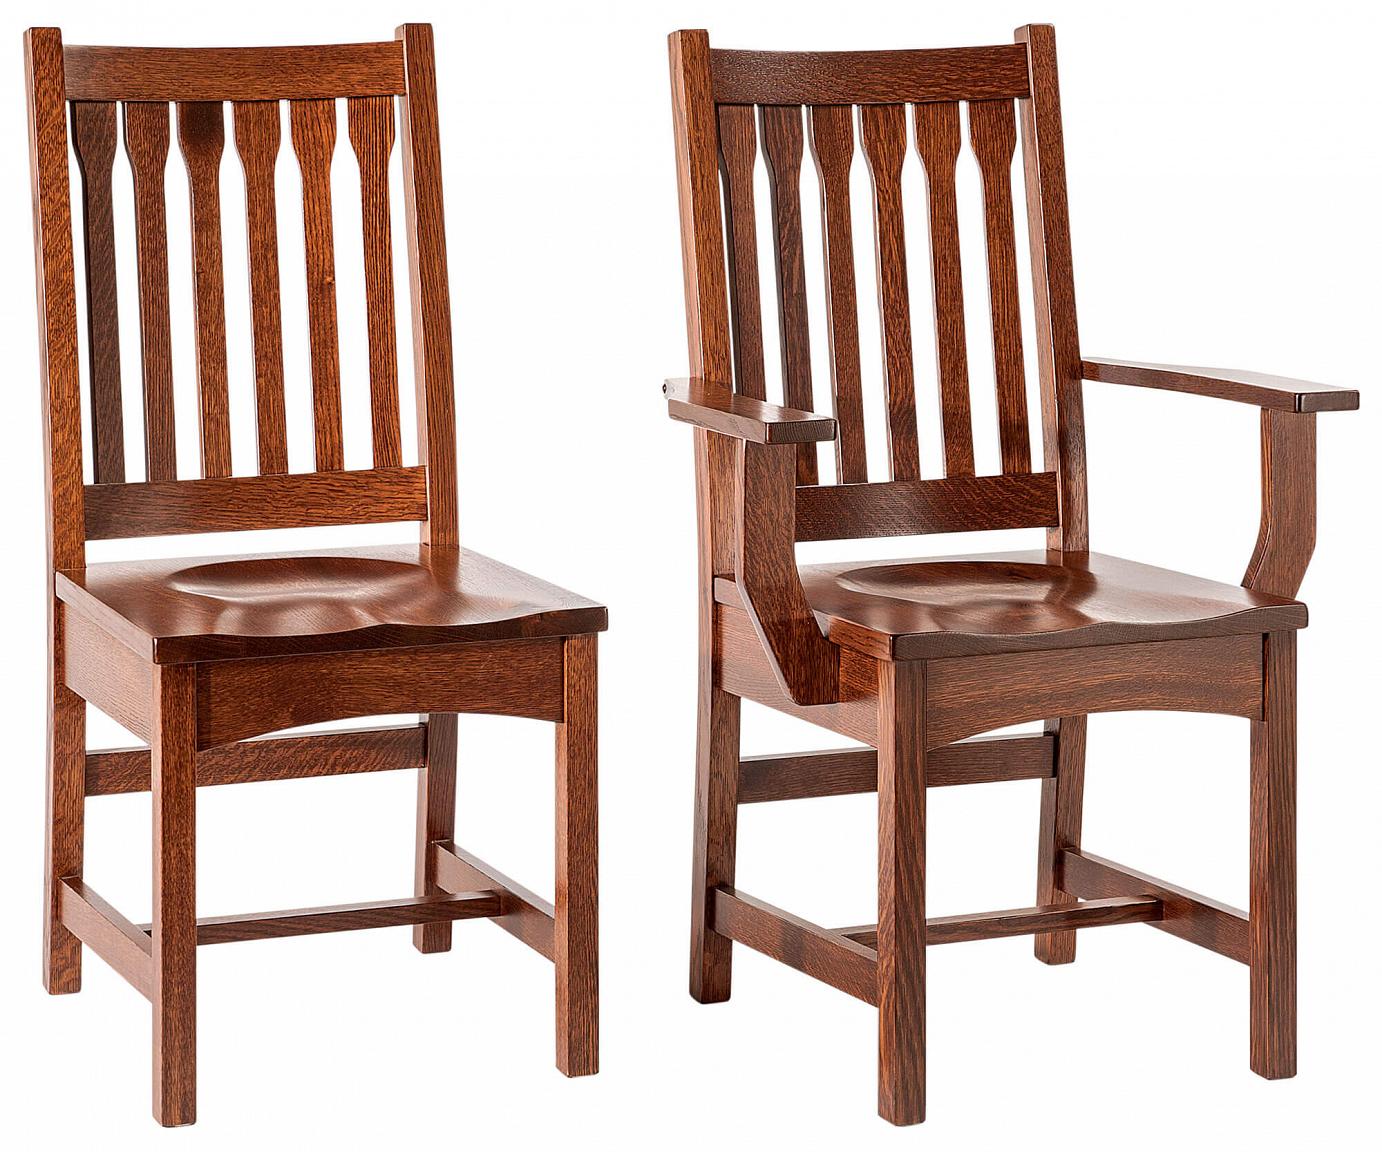 RH Yoder Buchanan Chairs